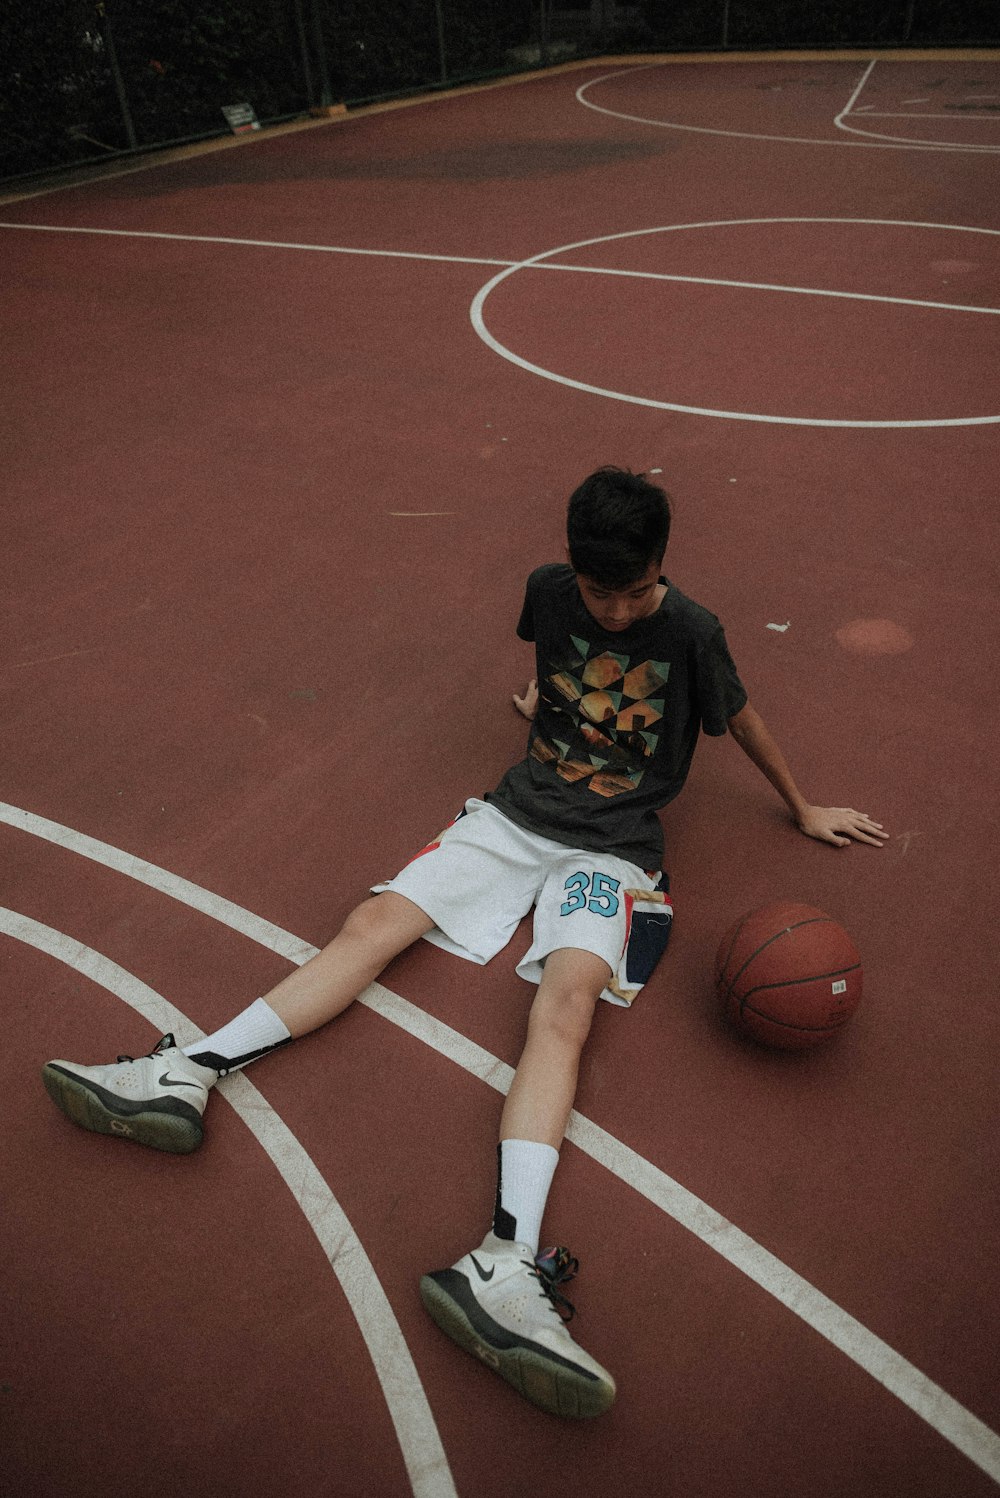 Man lying on basketball court looking to basketball photo – Free Adolescent  Image on Unsplash